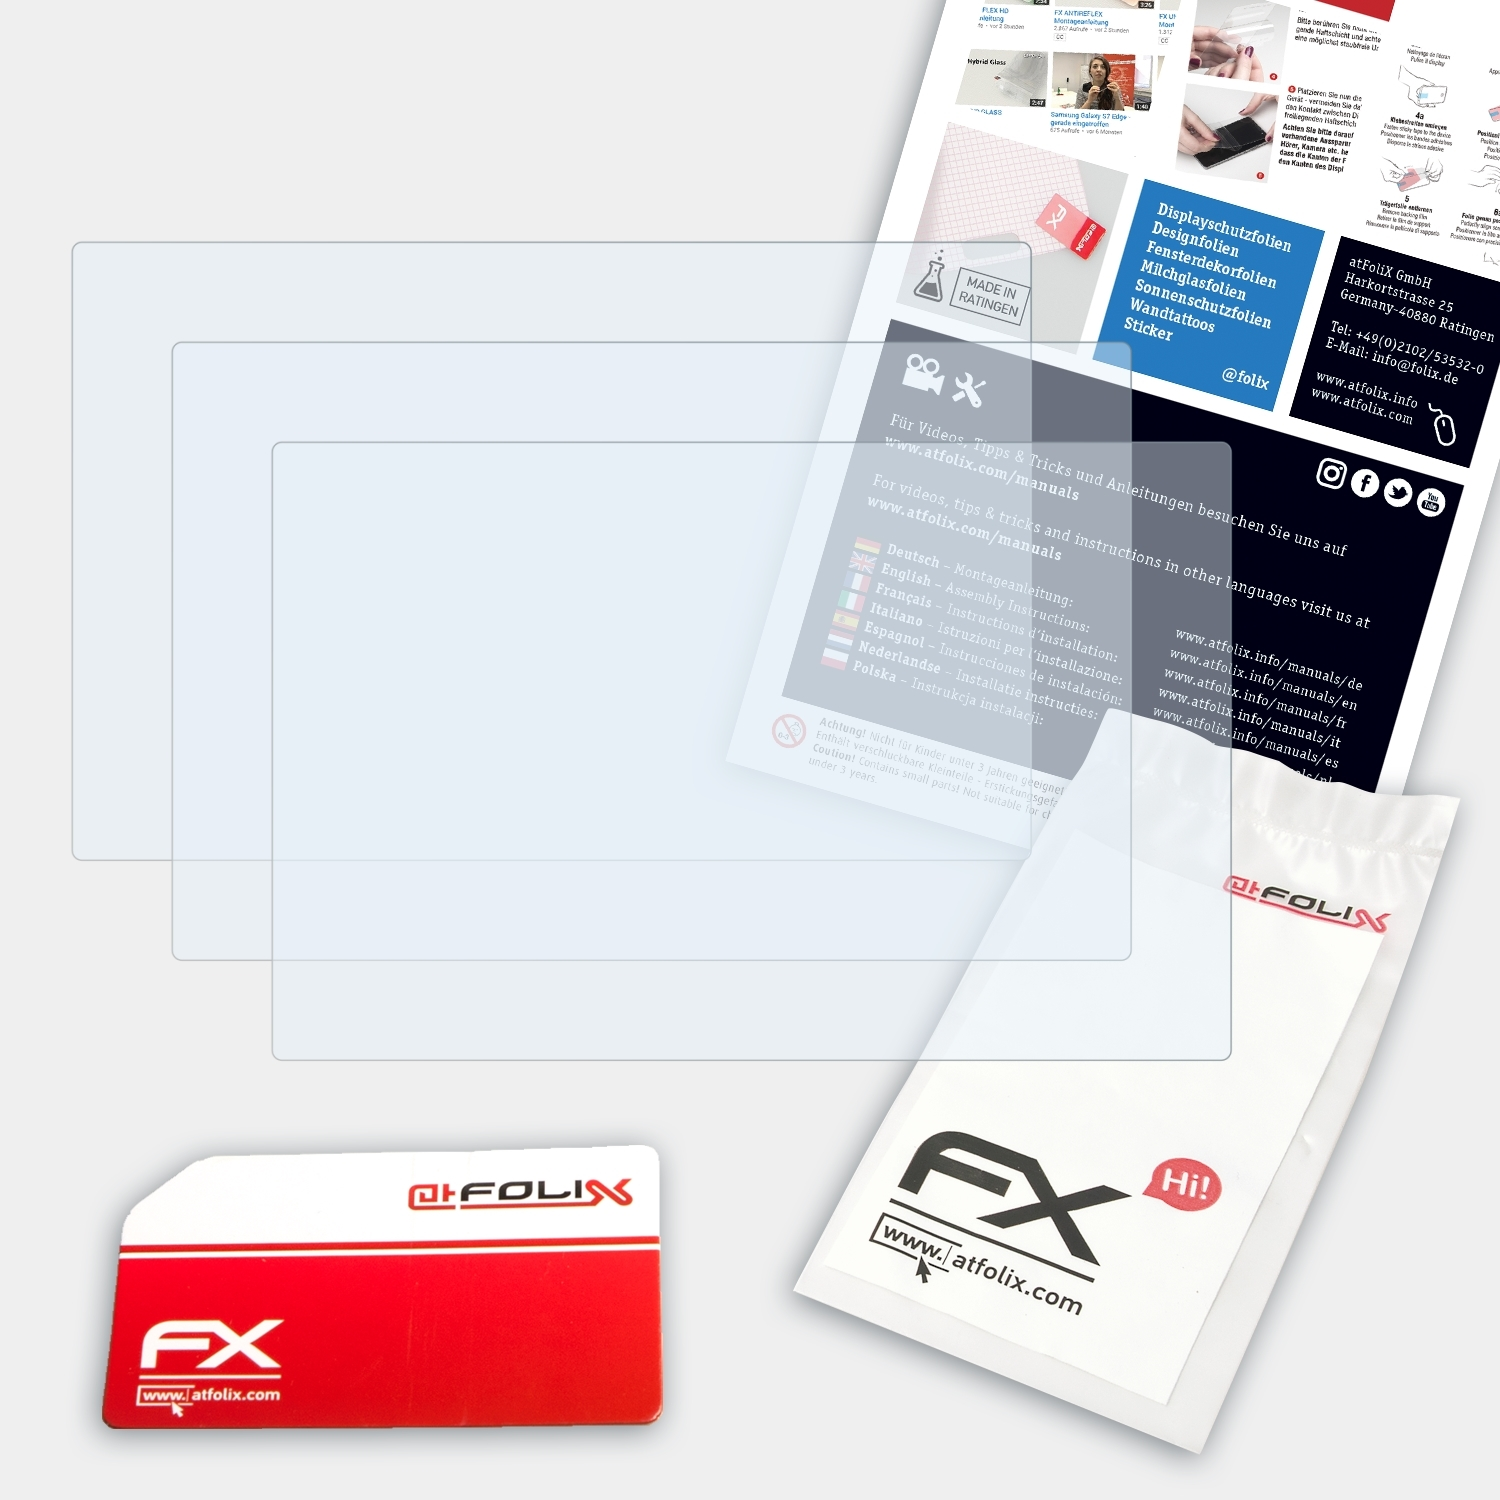 ATFOLIX 3x FX-Clear Displayschutz(für X30) Fujifilm